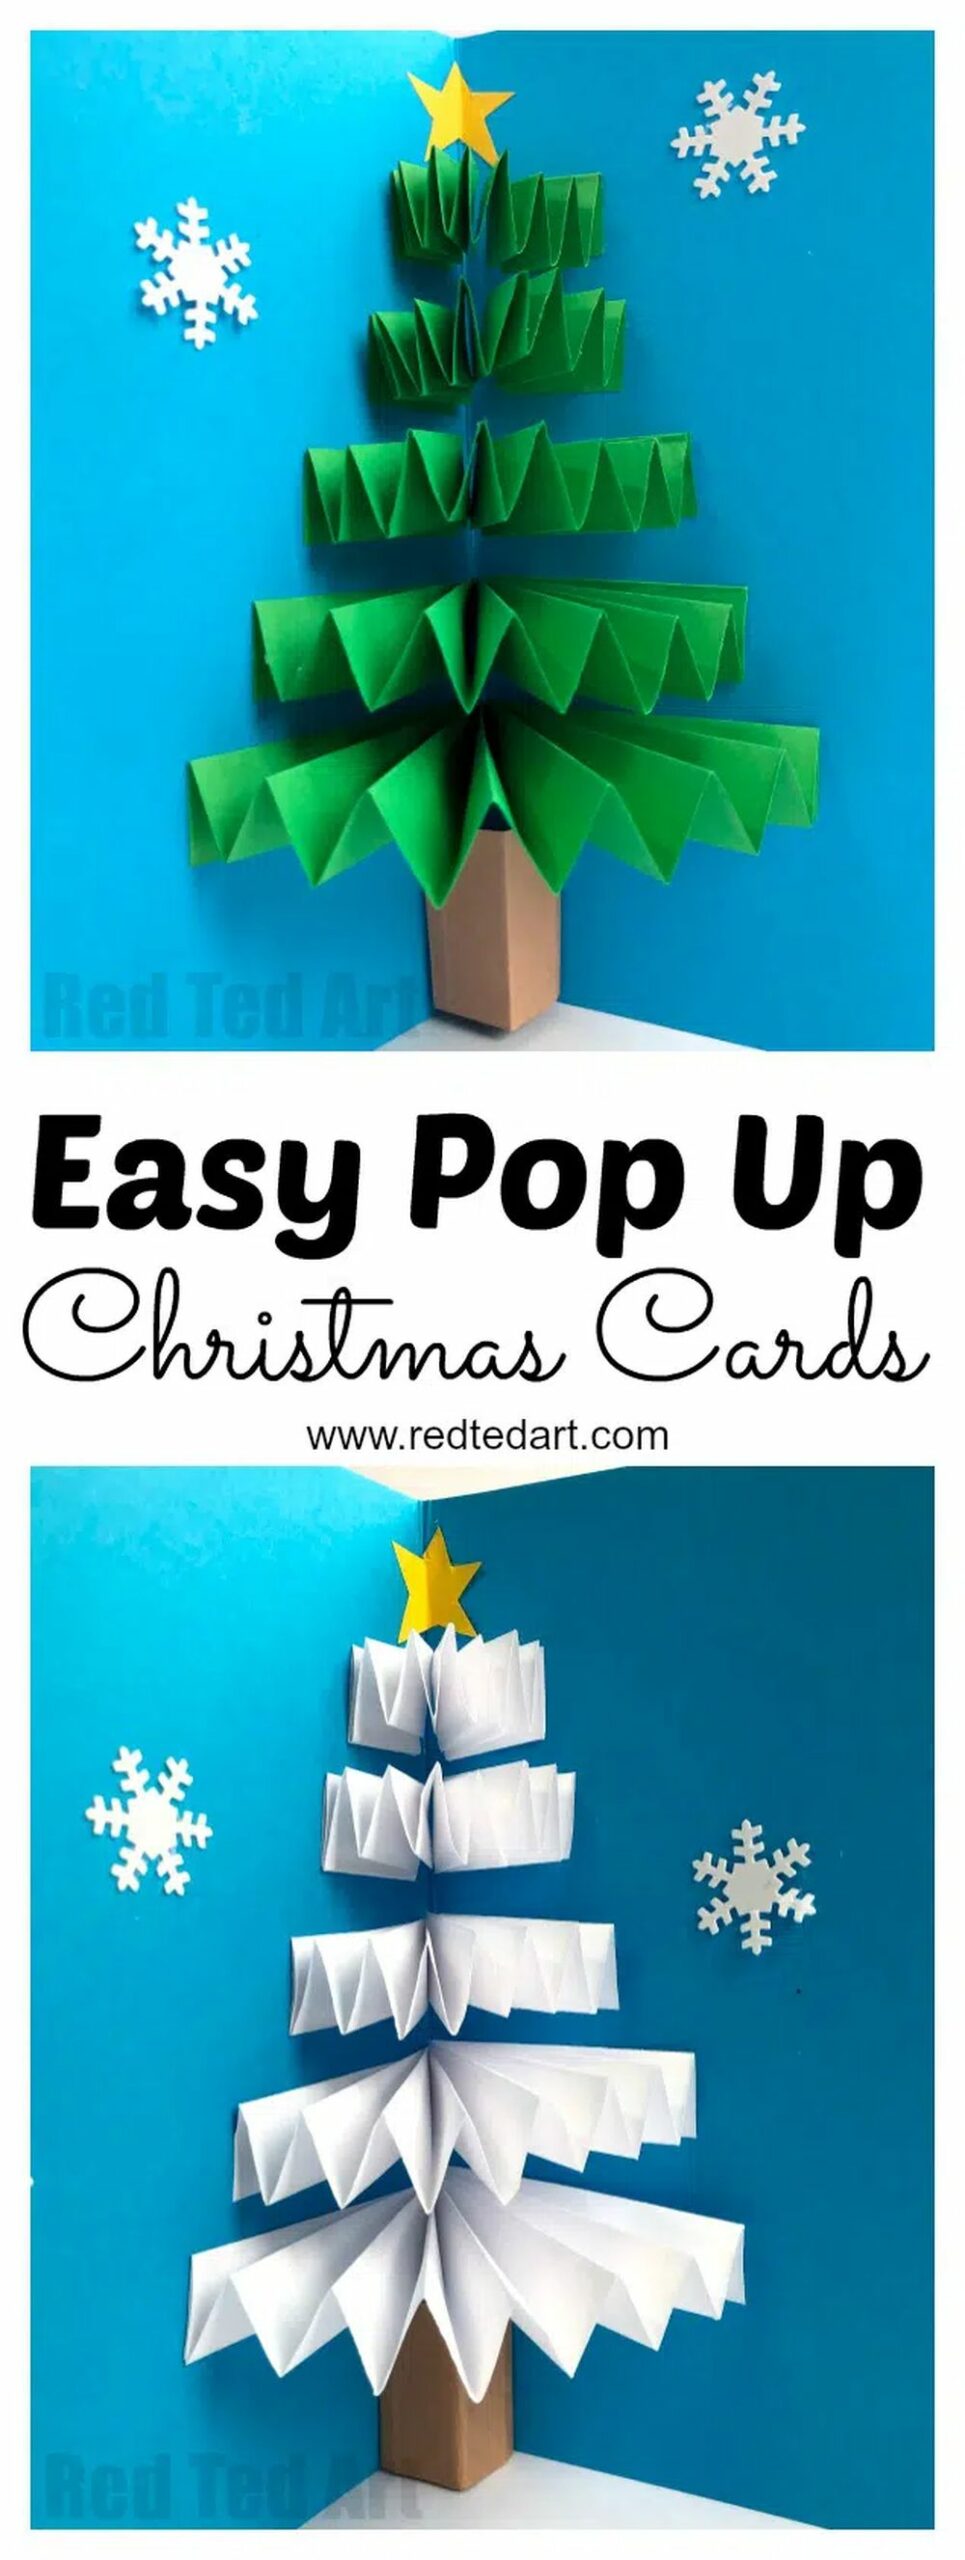 DIY Christmas Cards: 75 Christmas Card Ideas to Inspire You